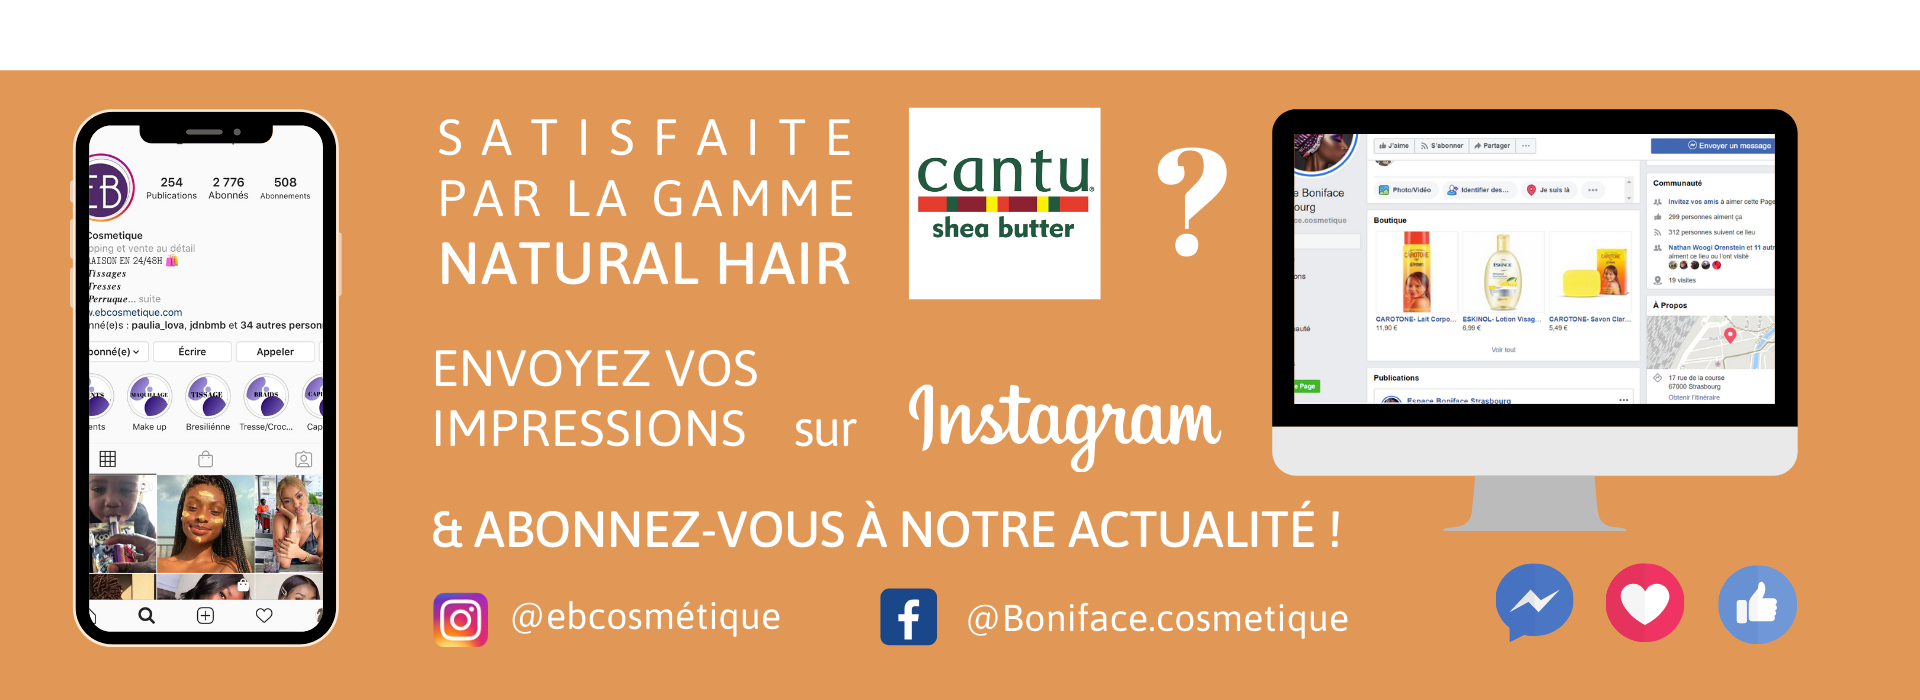 fiche produit ebcosmetique cantu shea butter natural hair conditioning creamy hair lotion routine capillaire afro bouclé facebook instagram